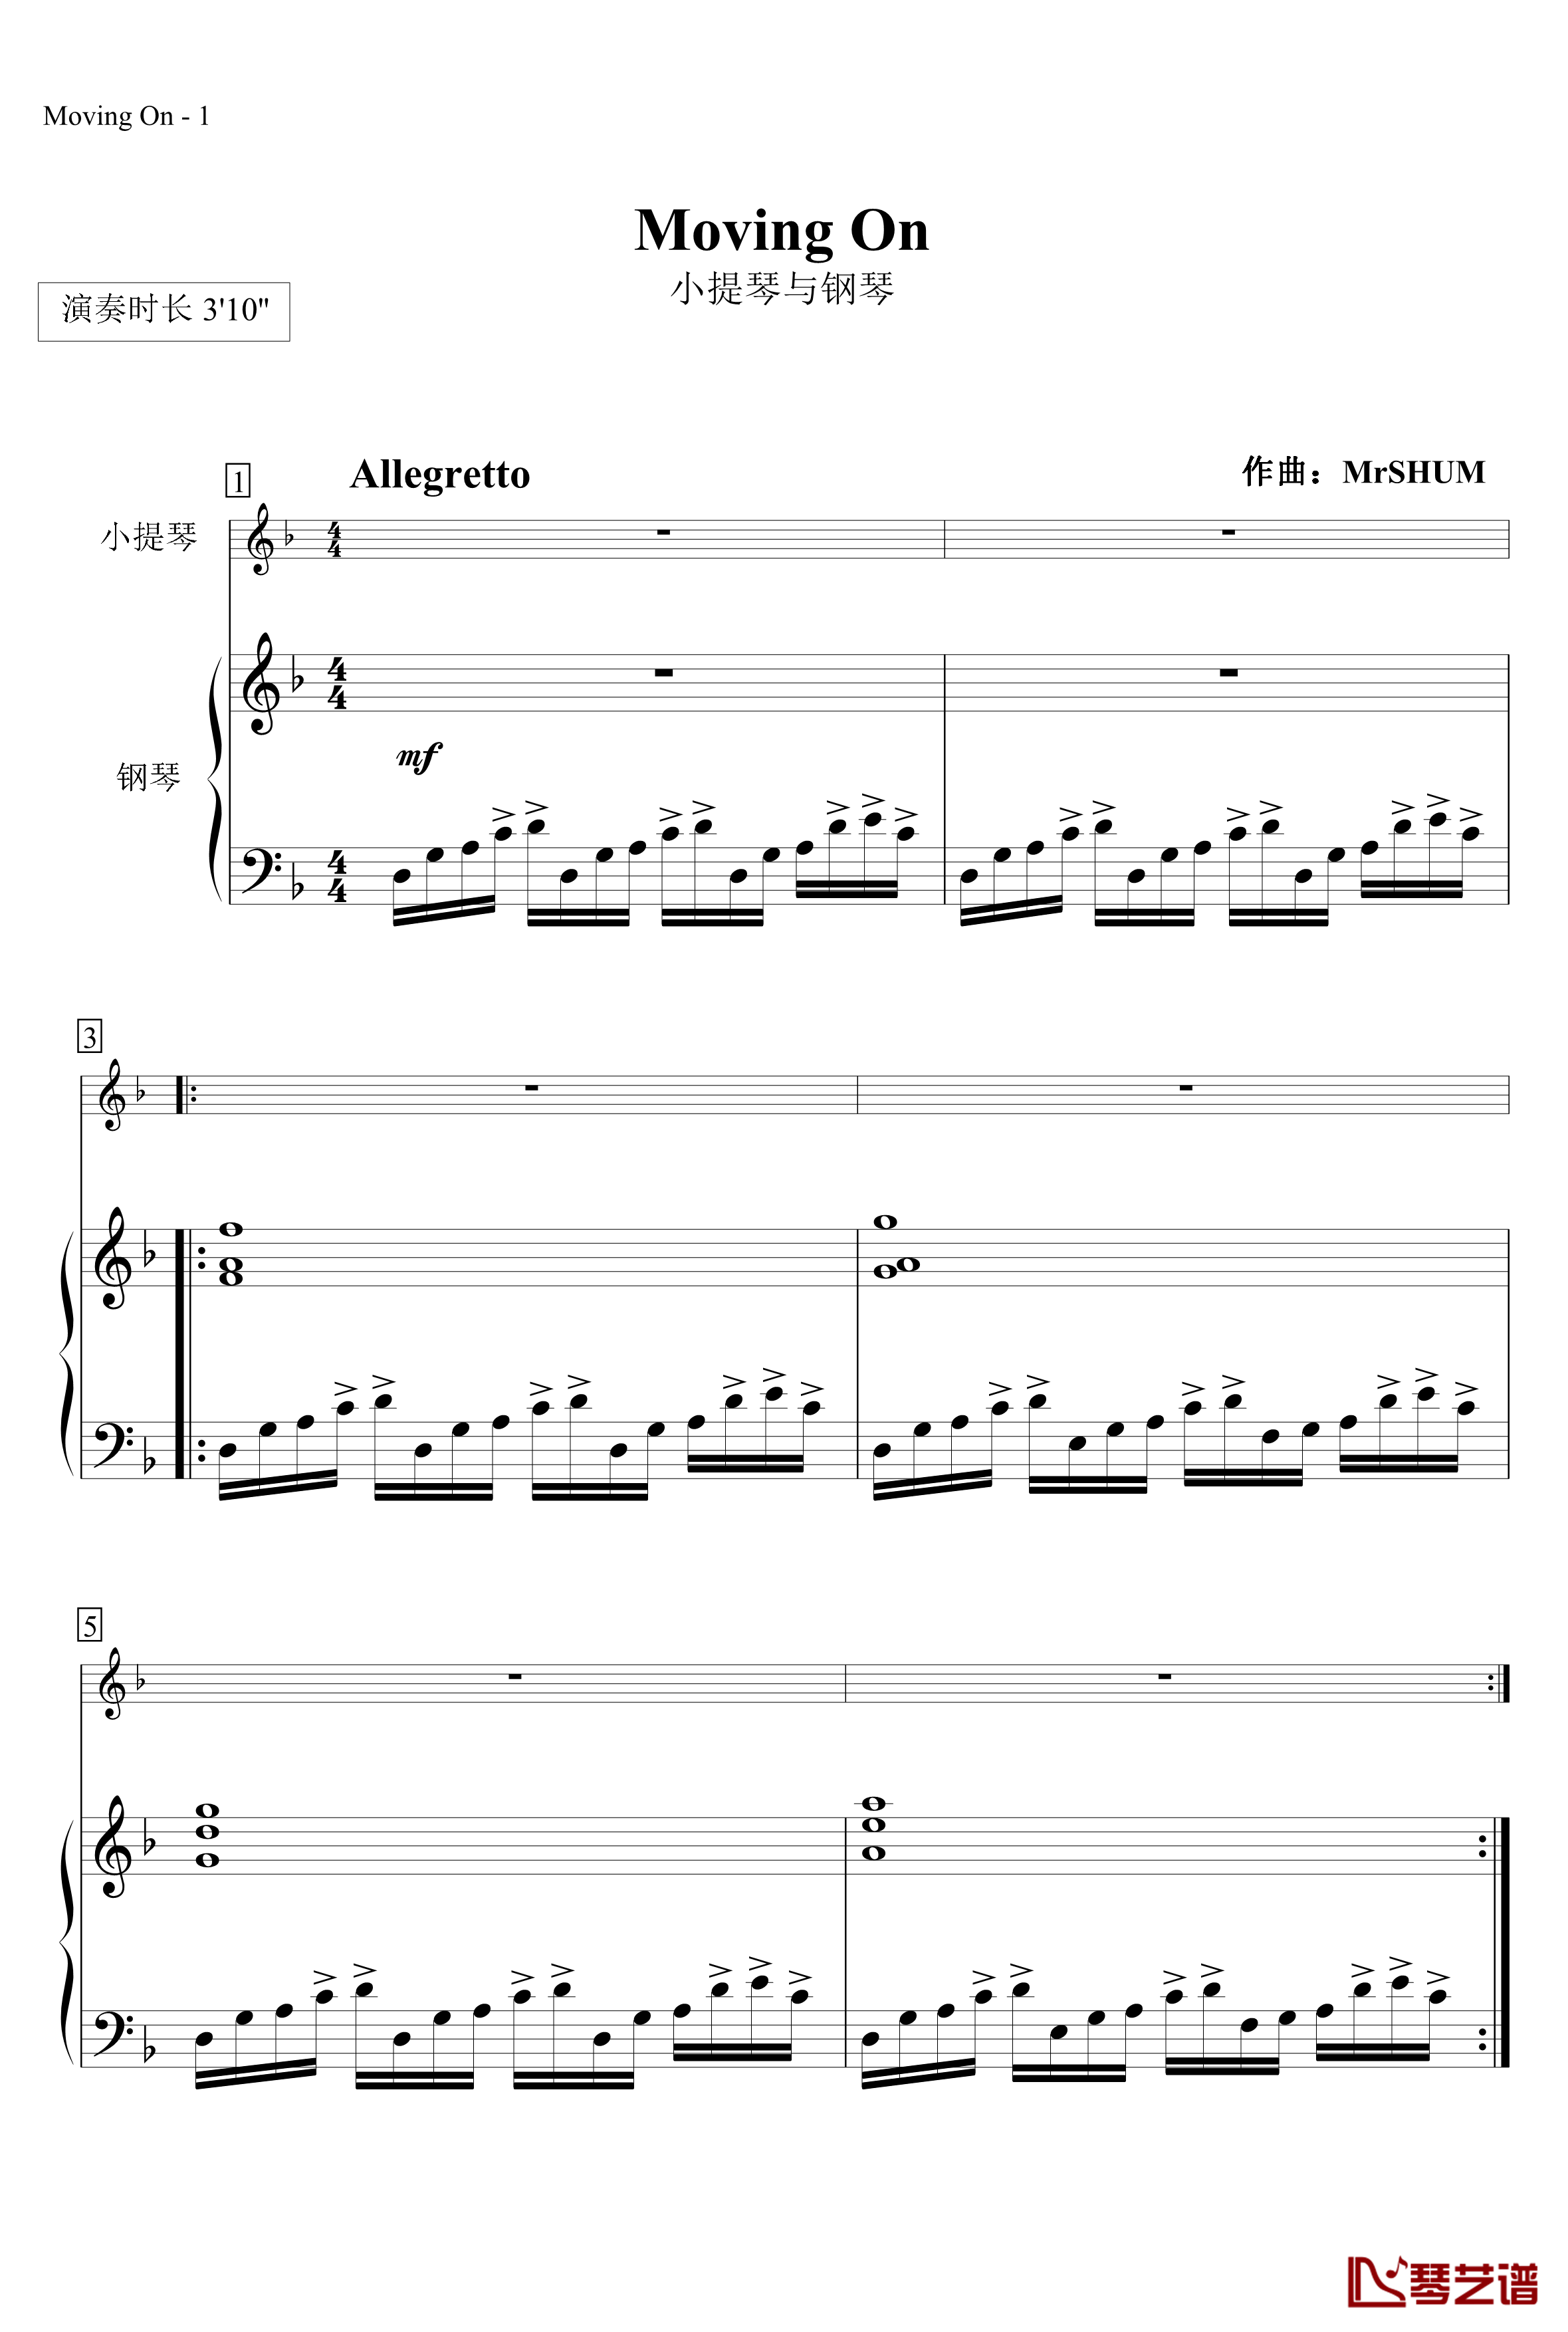 Moving On钢琴谱-第1版-MrSHUM1